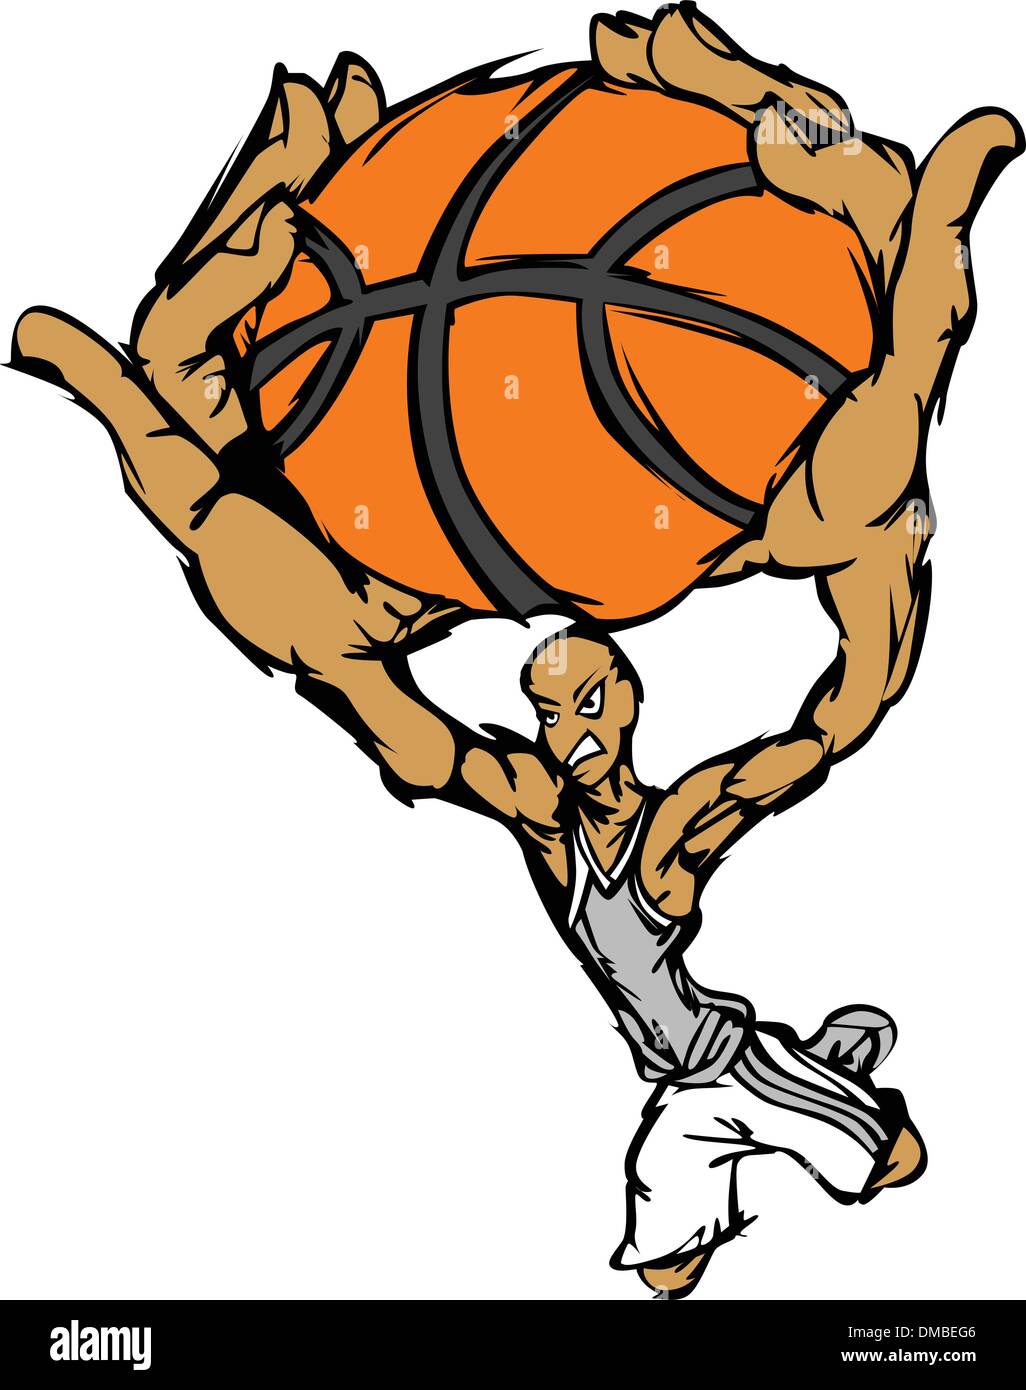 Basketball Player Cartoon Dunking Basketball Vector Illustration Stock Vector